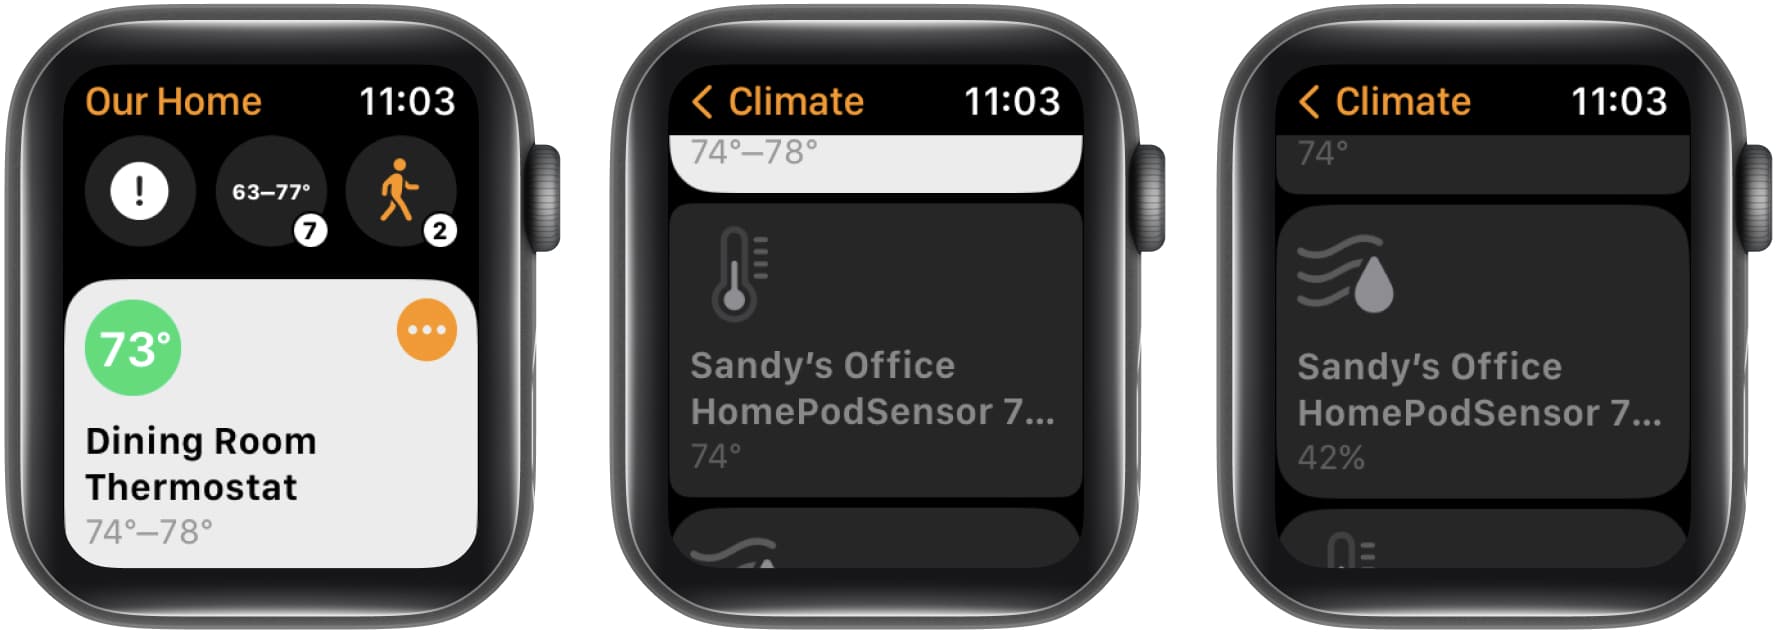 Lihat bacaan iklim pada Apple Watch